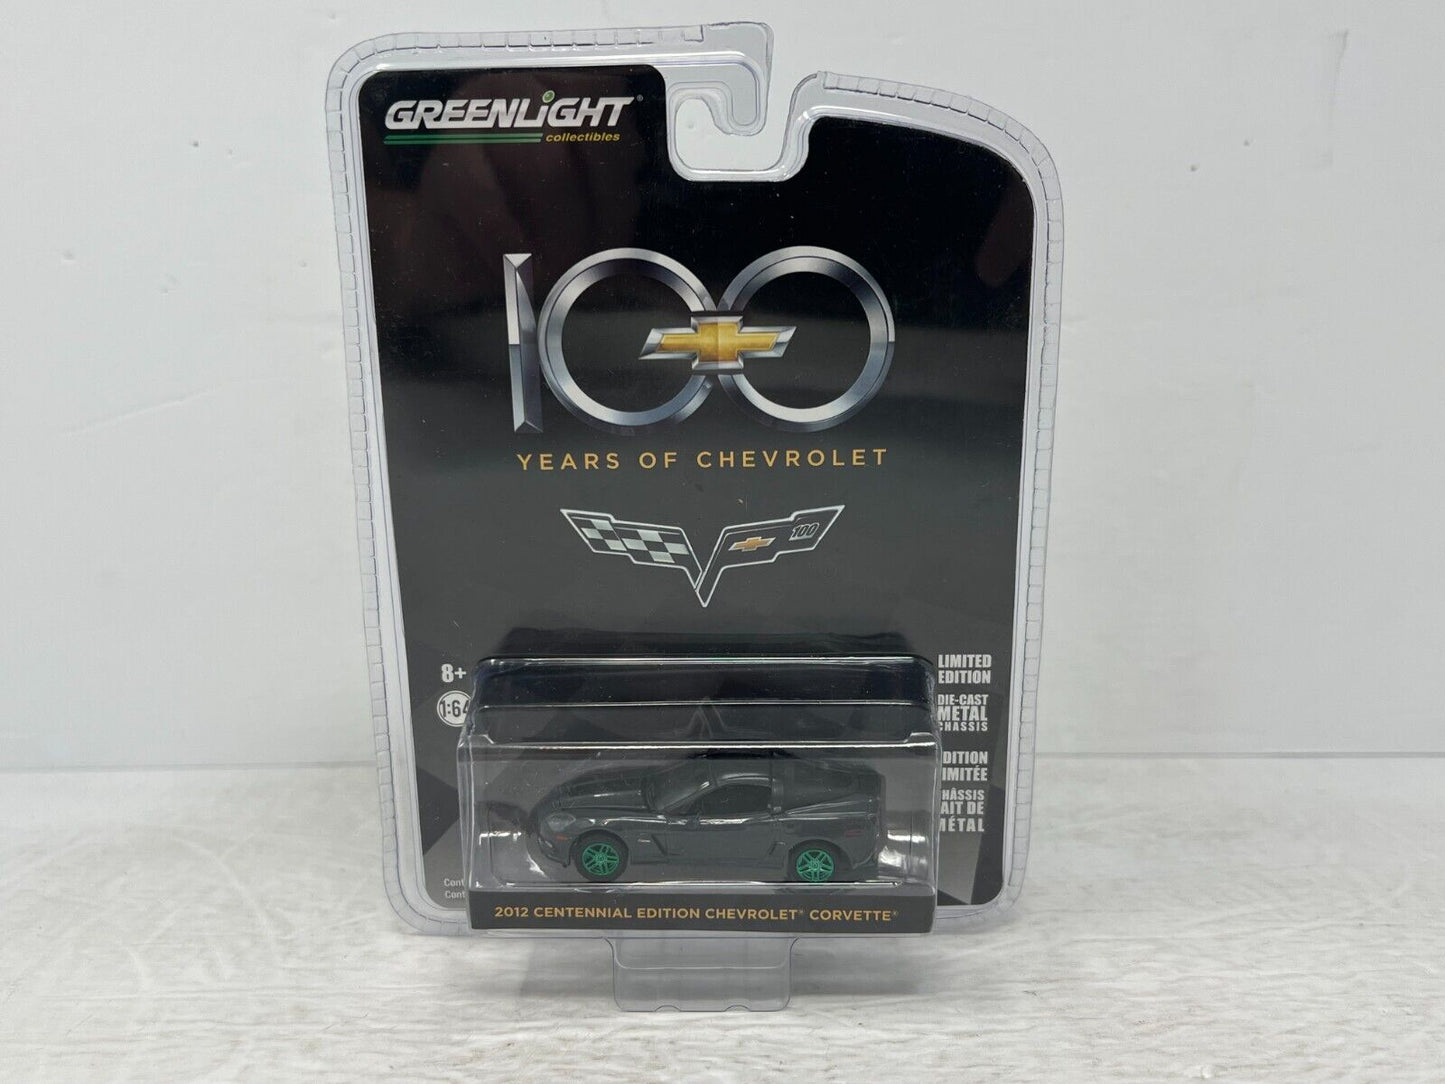 Greenlight 2012 Centennial Edition Chevrolet Corvette Green Machine 1:64 Diecast